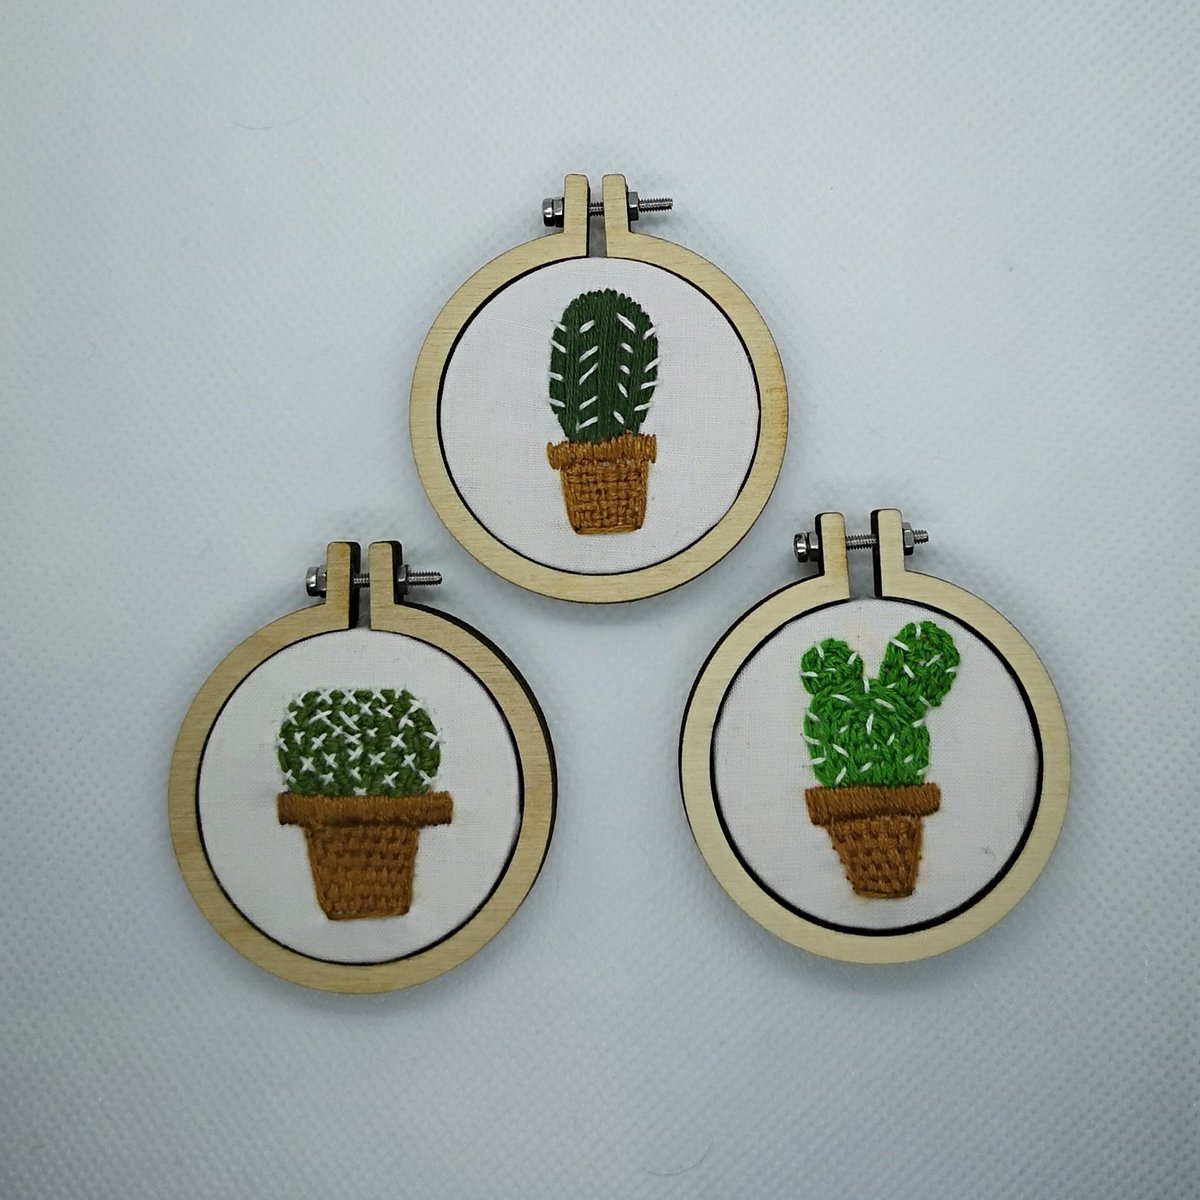 A trio of cacti!